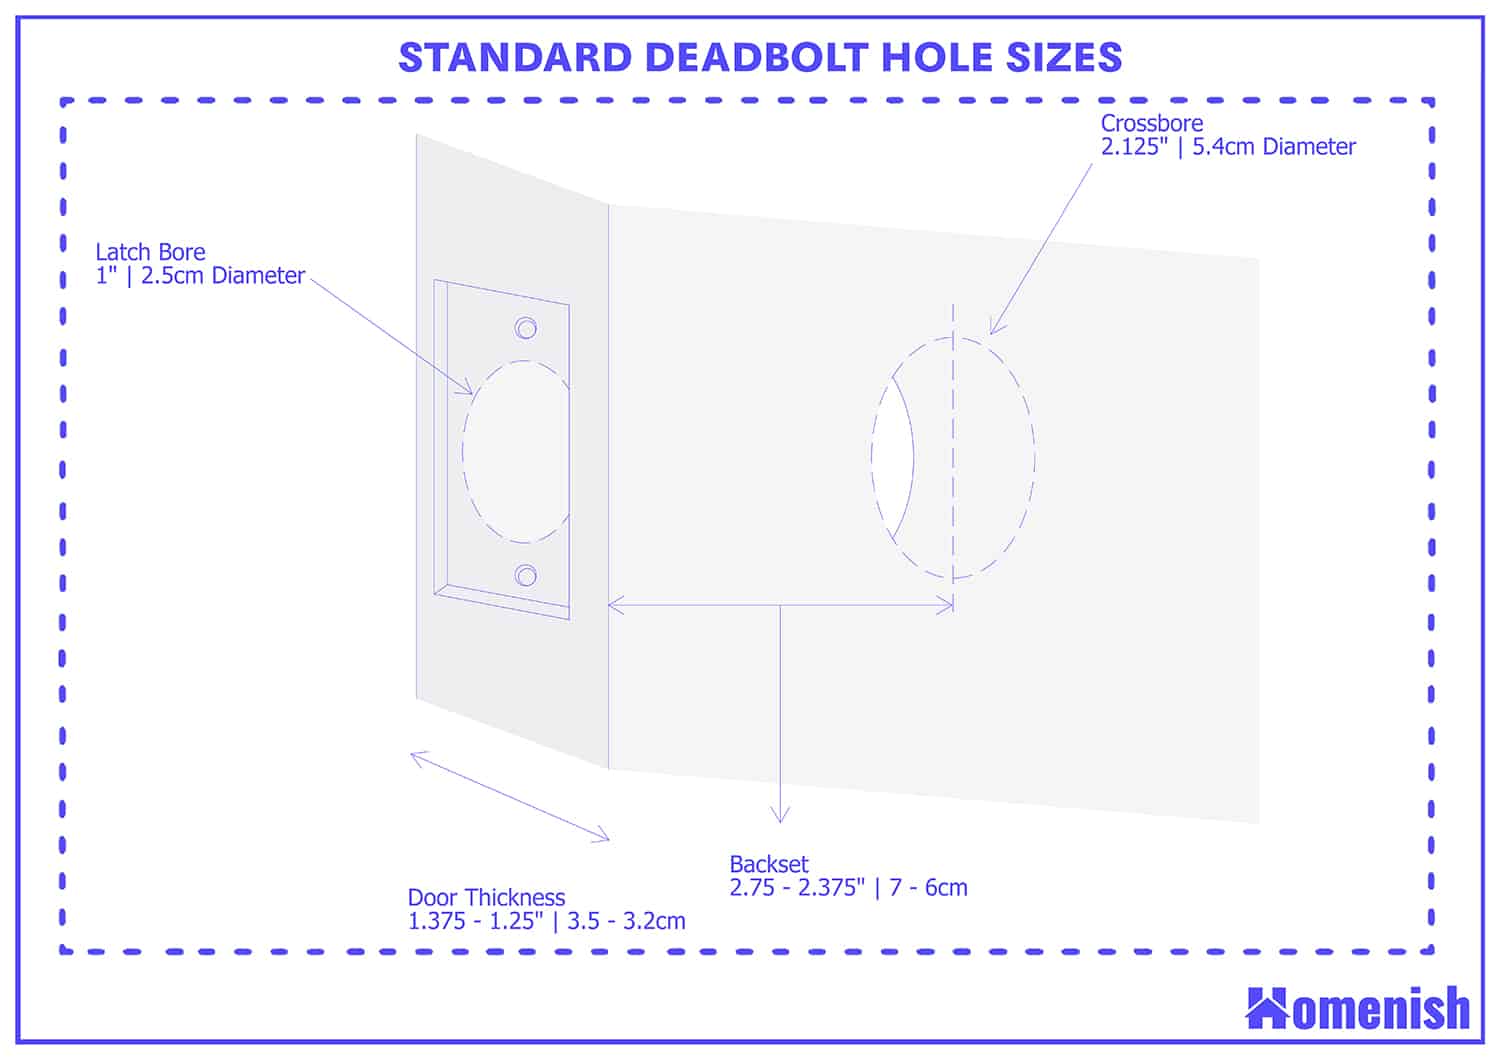 Standard deadbolt hole sizes